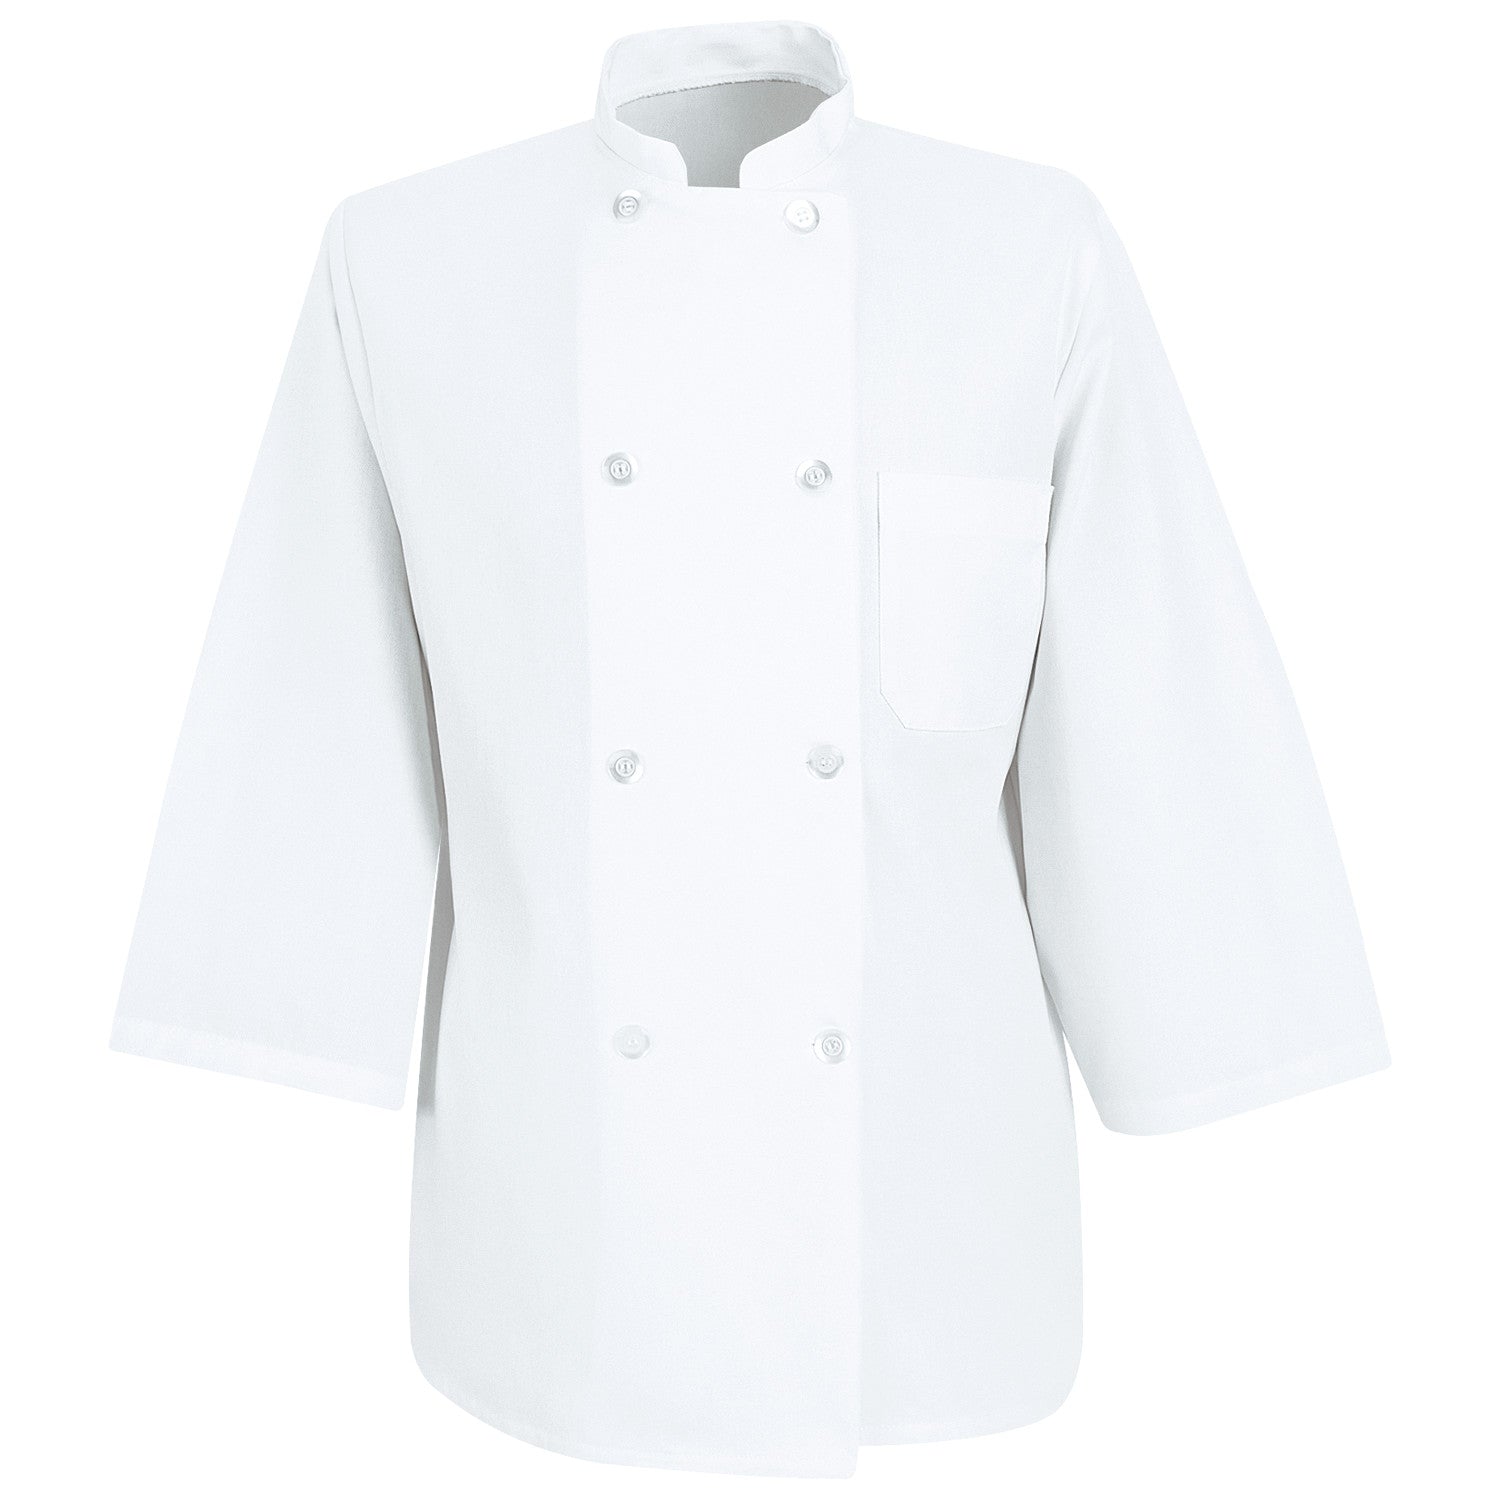 ¾ Sleeve Chef Coat 0402 - White